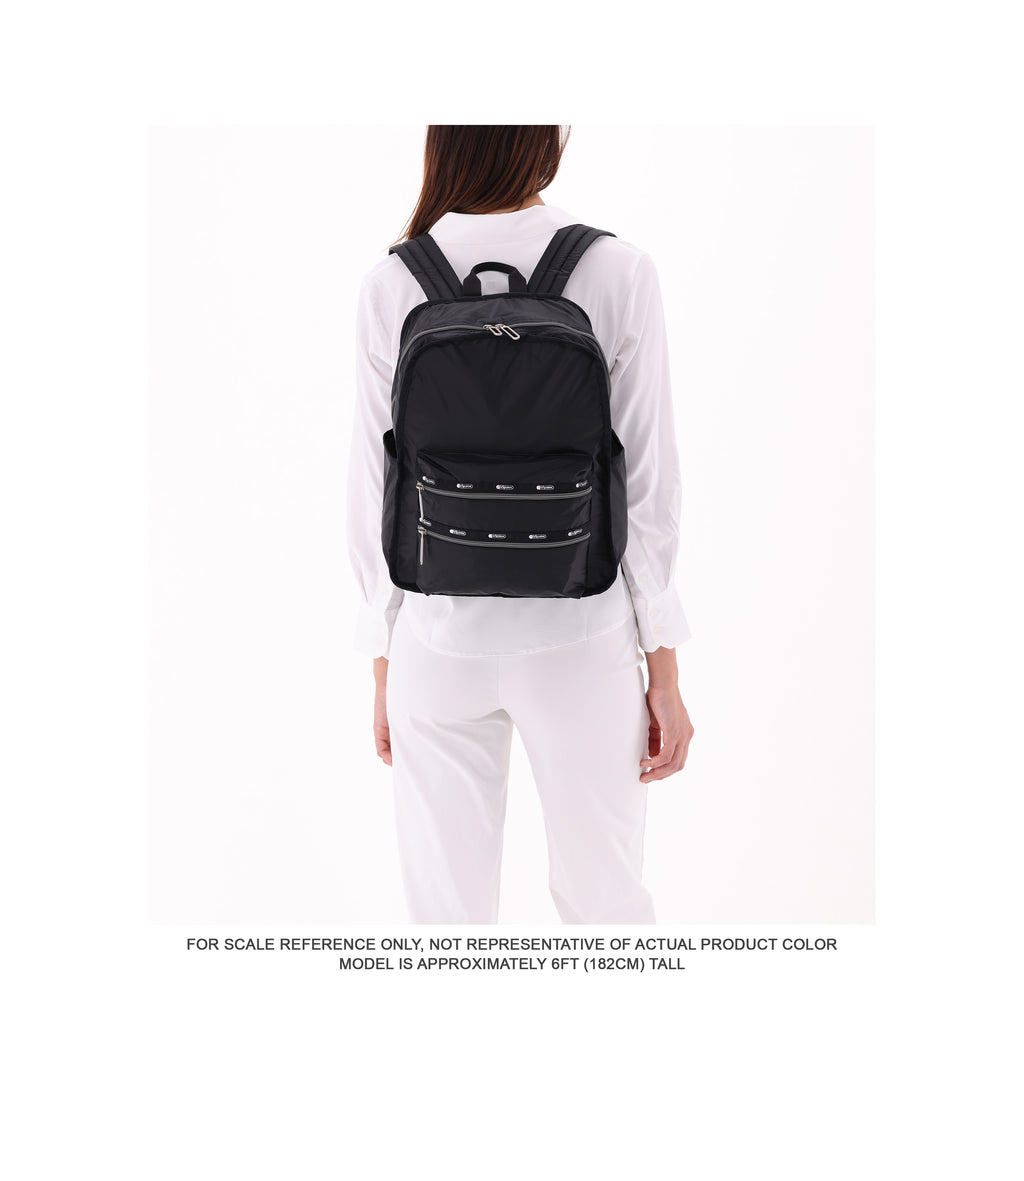 Functional Backpack - 23452368896048